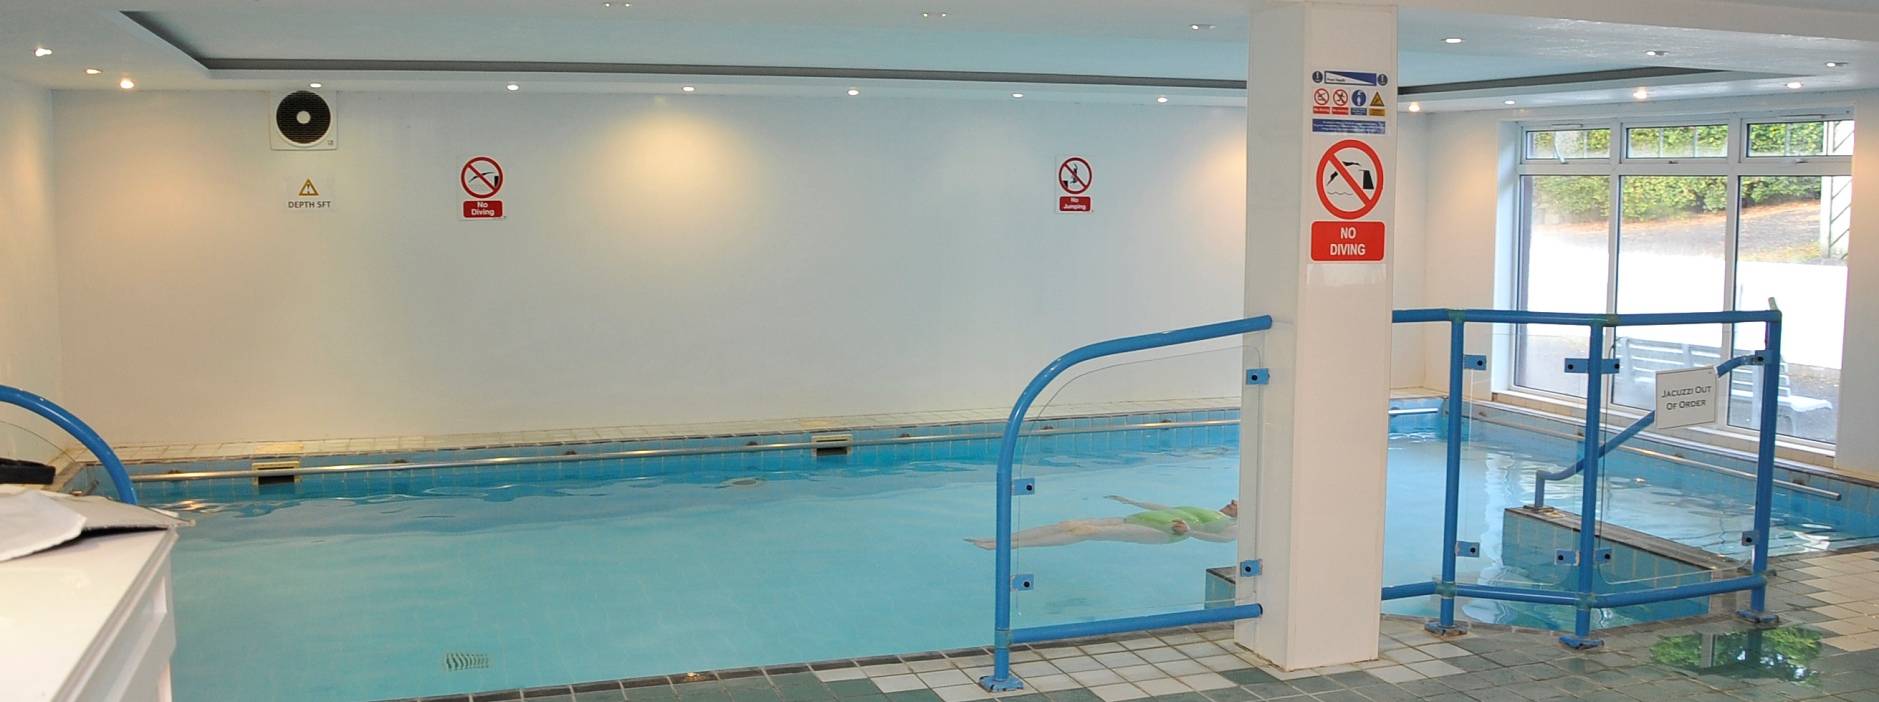 Indoor Pool bushtown Hotel Coleraine Londonderry